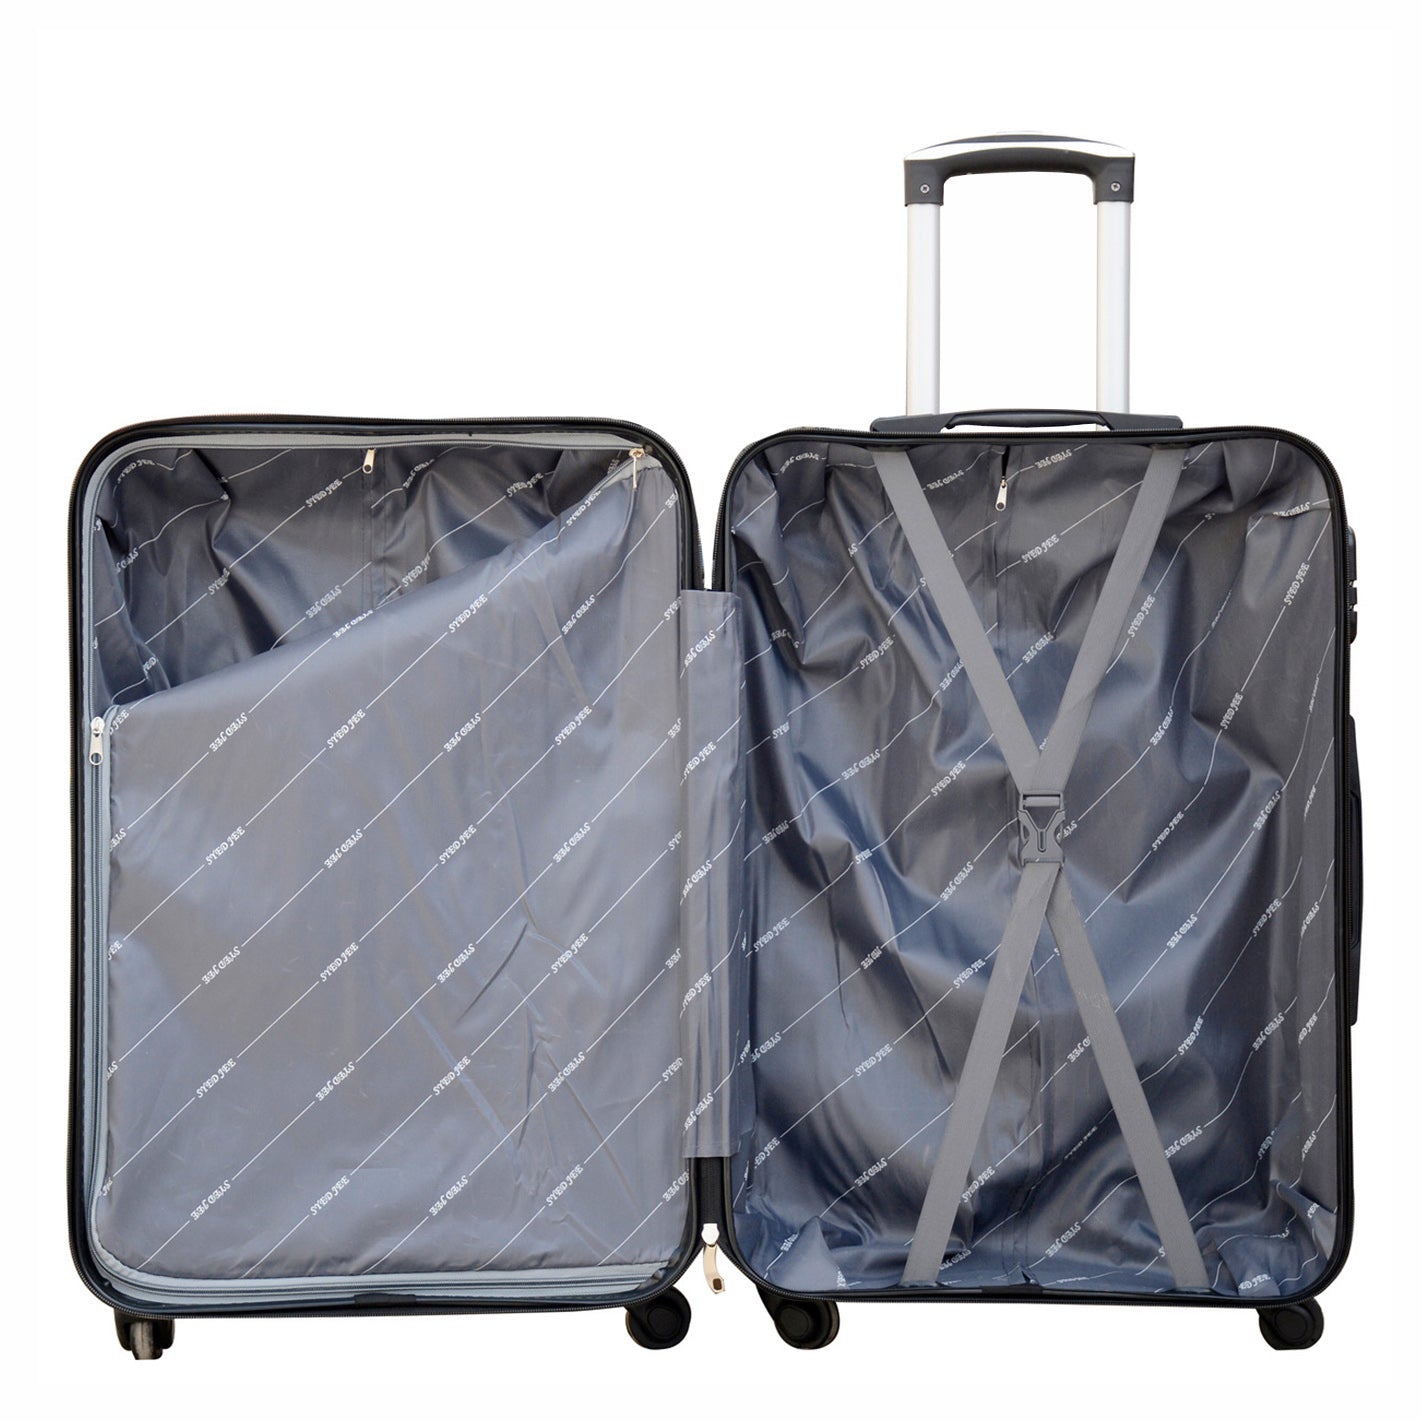 24" Black Colour SJ ABS Luggage Lightweight Hard Case Trolley Bag